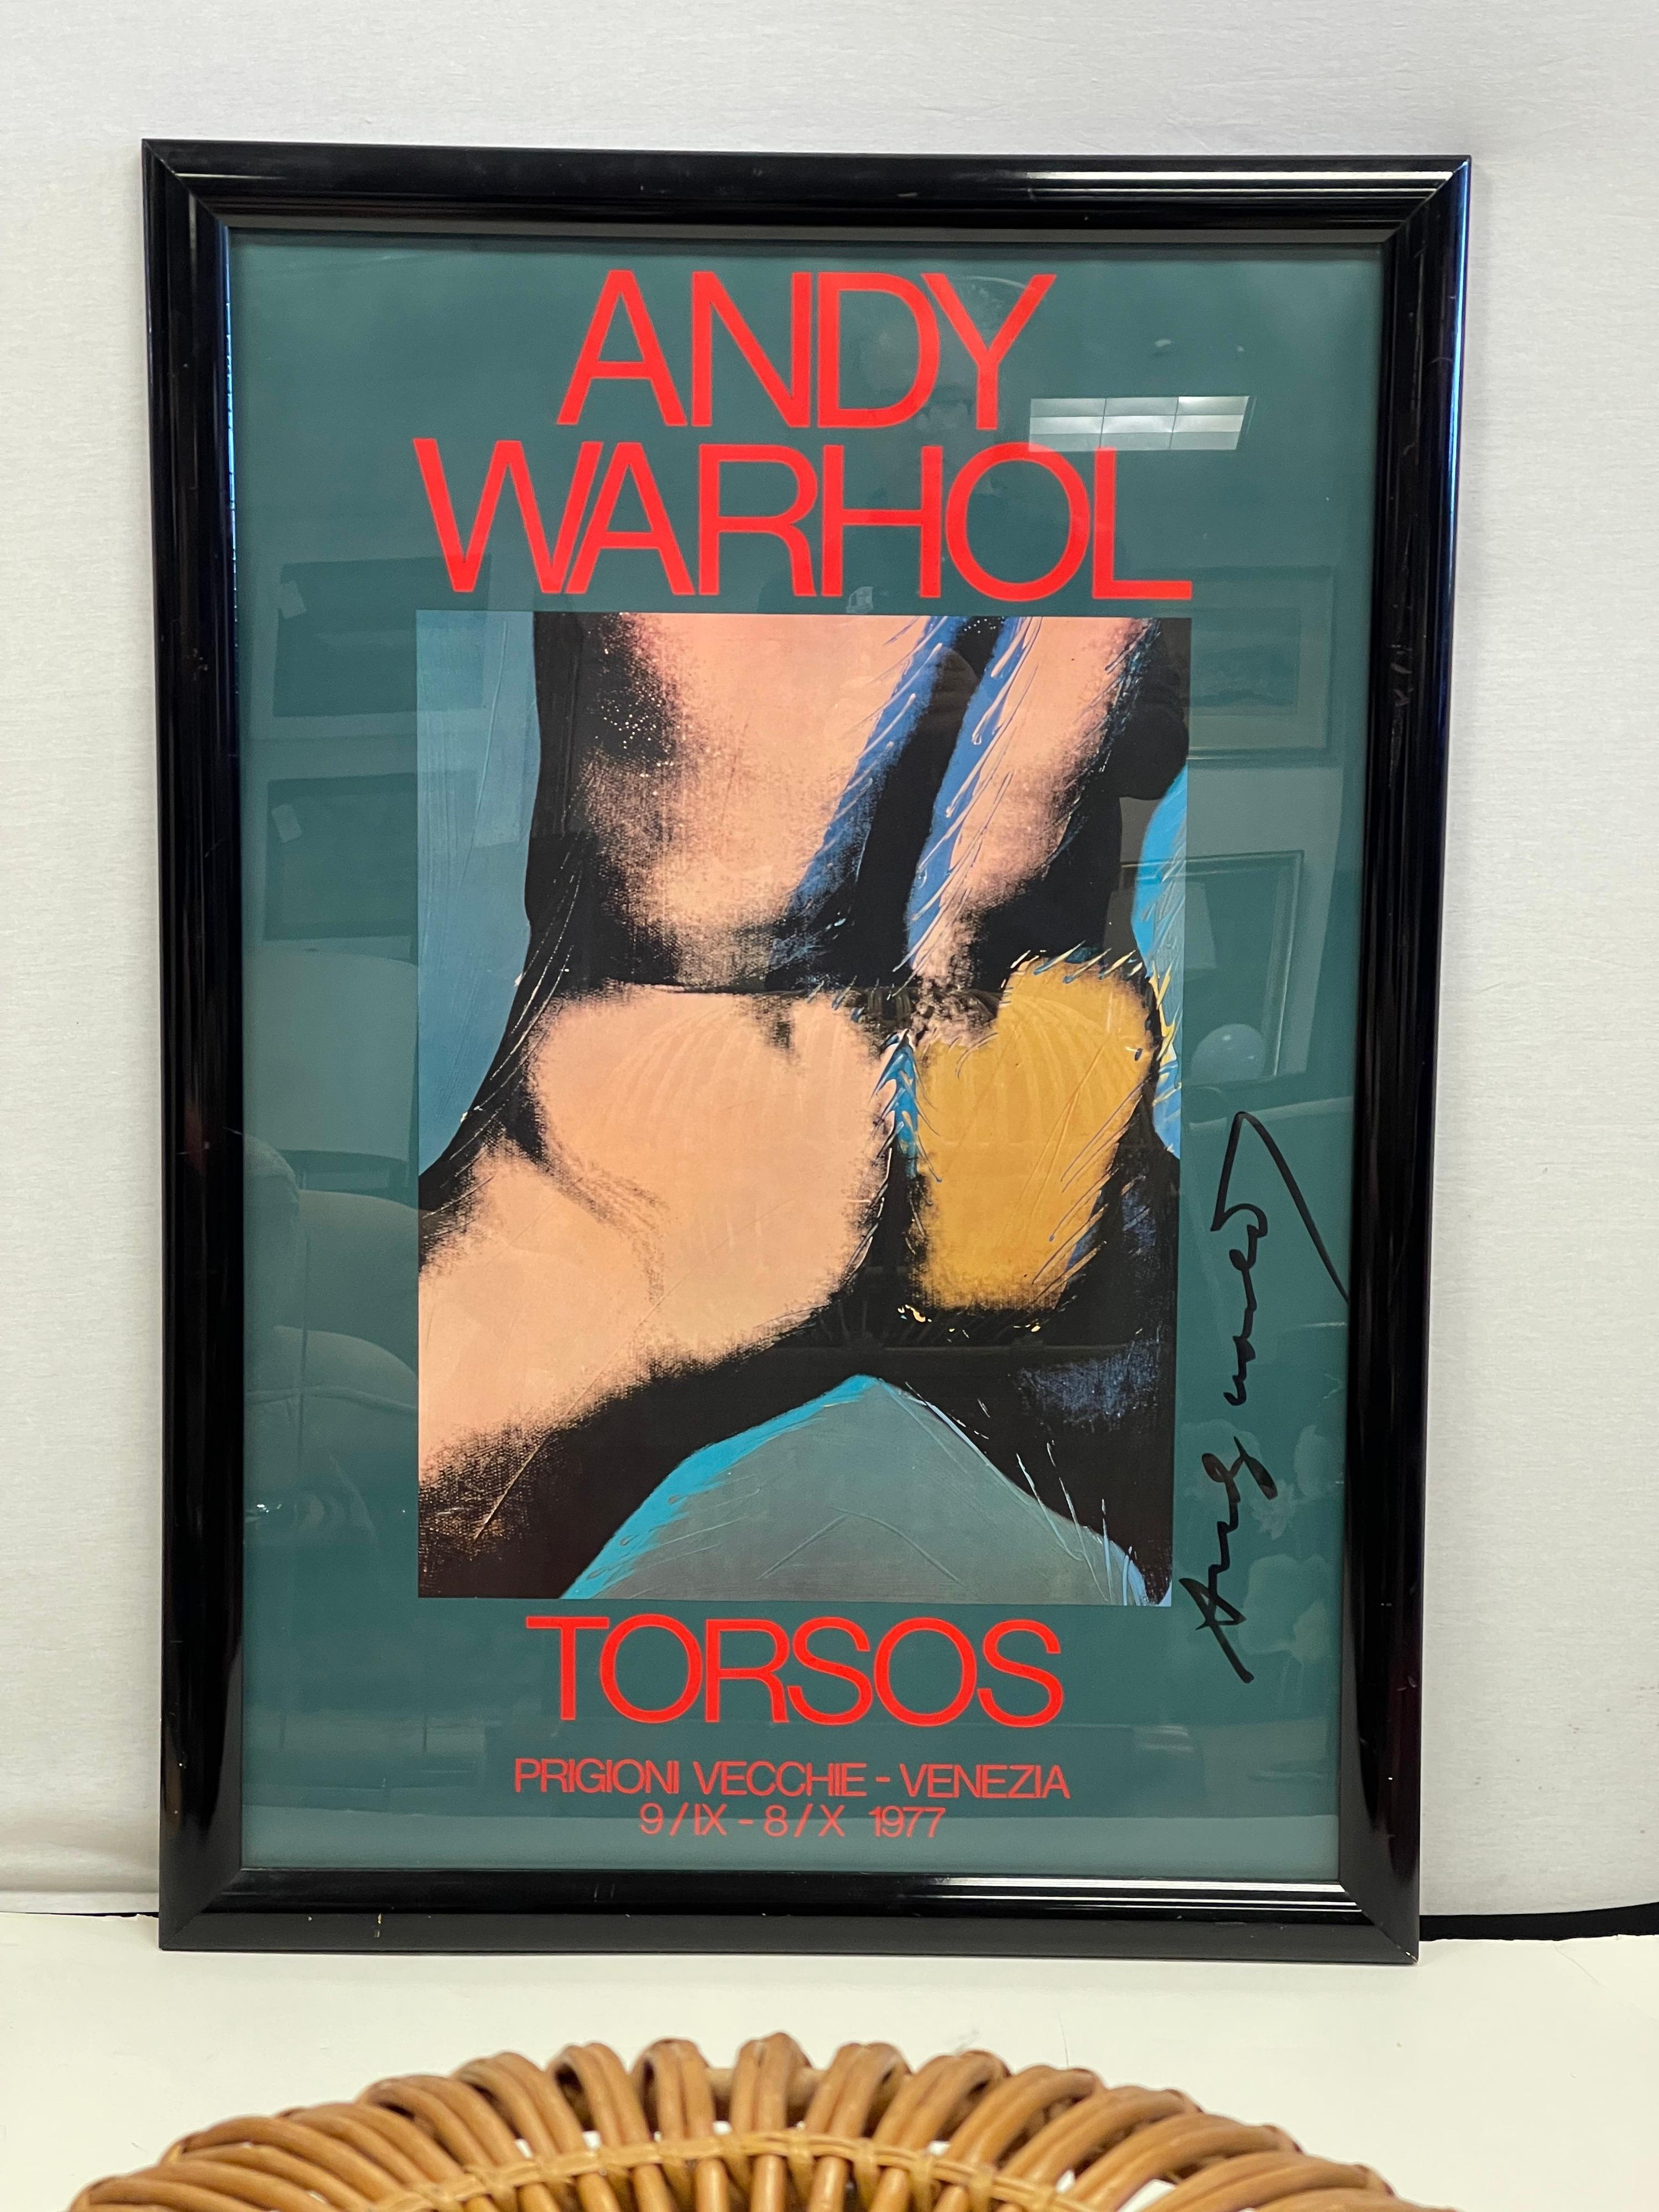 Plexiglass Signed Andy Warhol Torsos 1977 Lithograph Framed Prigioni Vecchie Venezia Rare